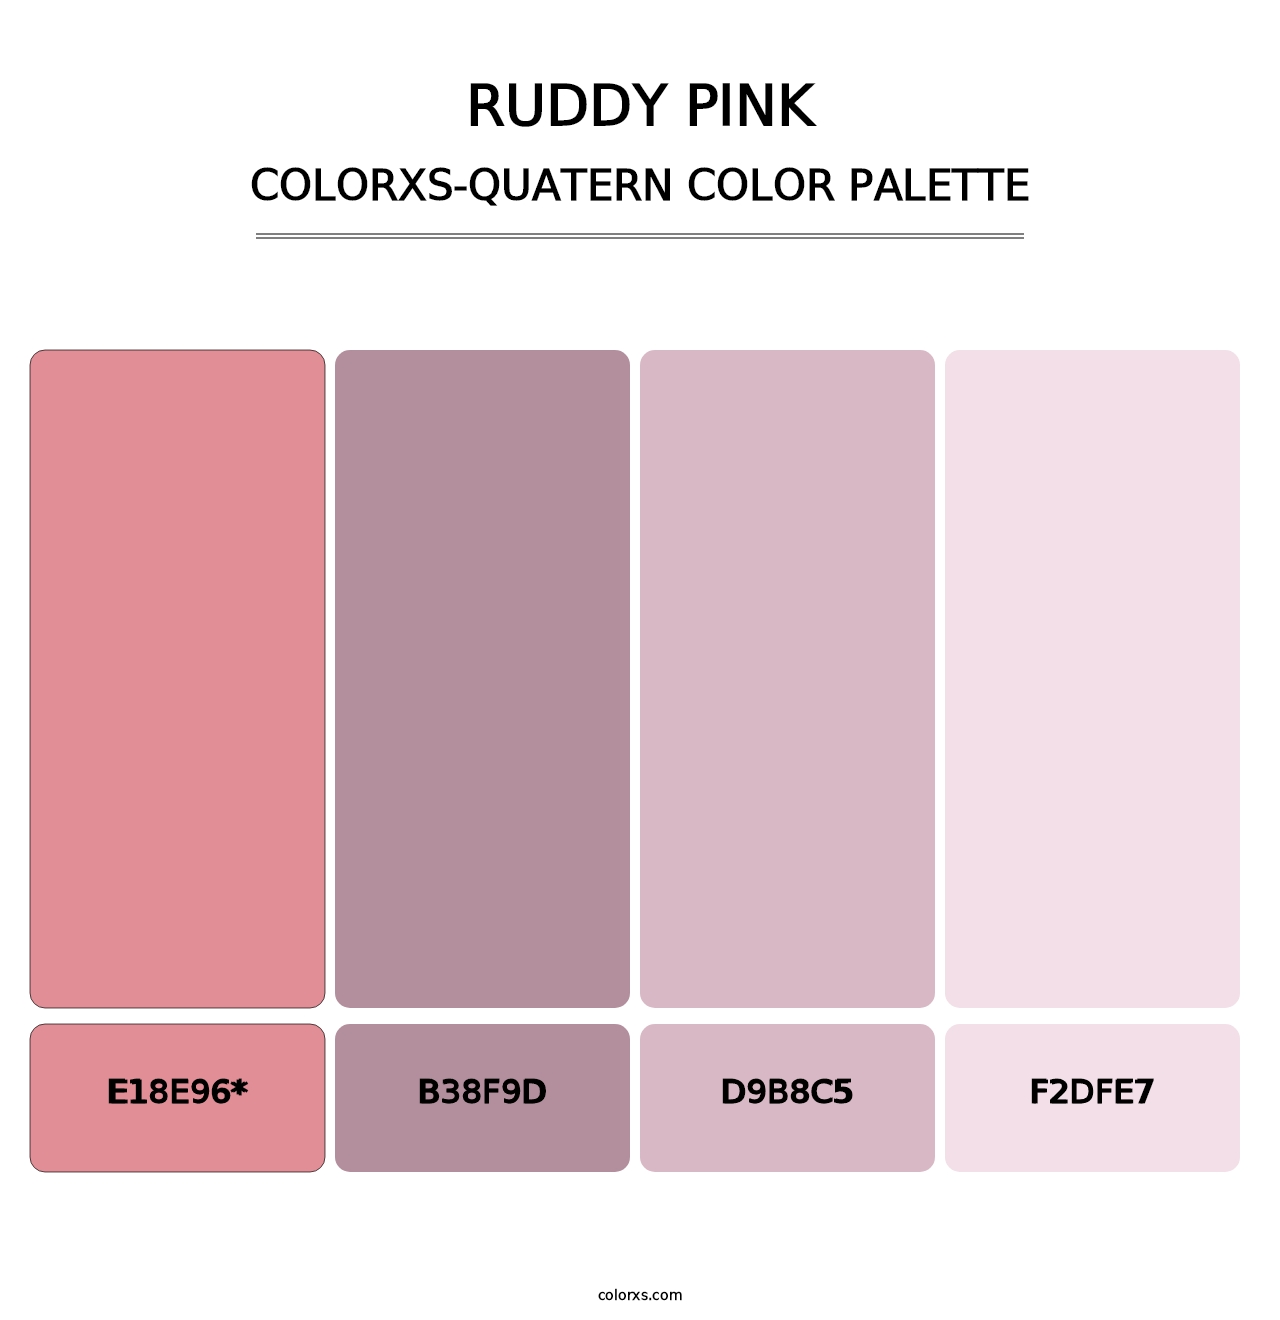 Ruddy Pink - Colorxs Quatern Palette